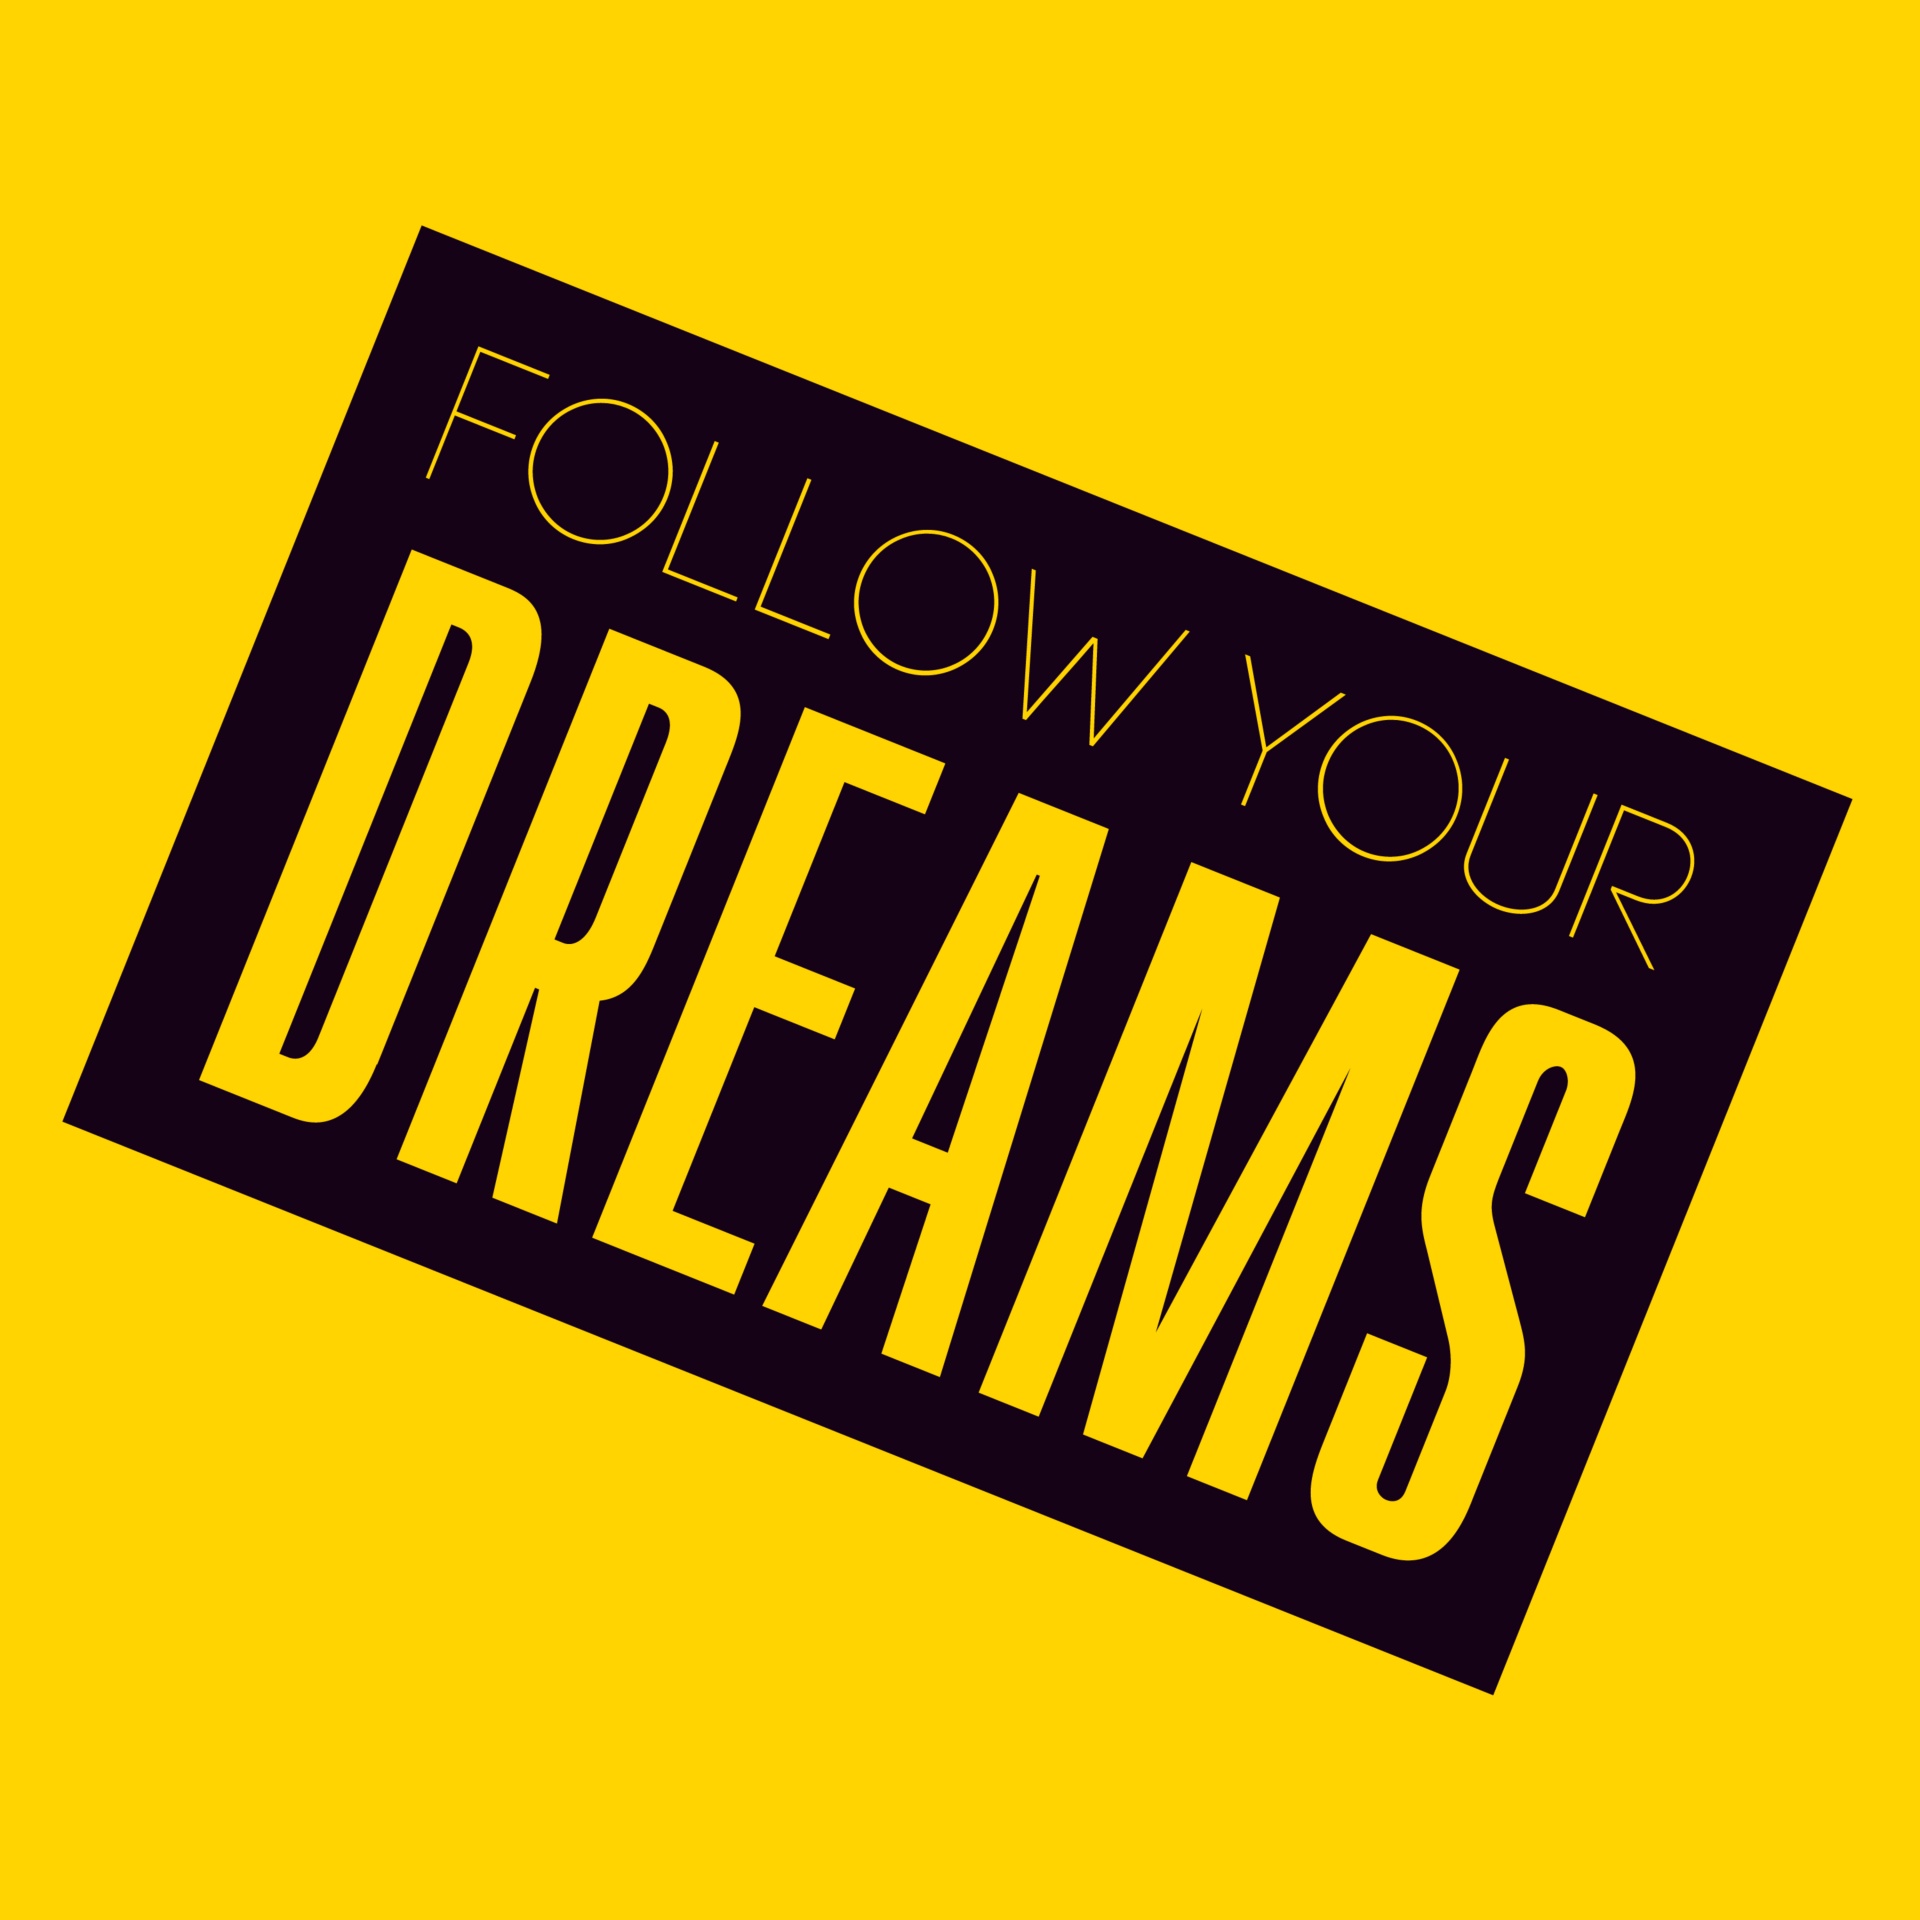 Follow Your Dreams Free Stock Photo - Public Domain Pictures